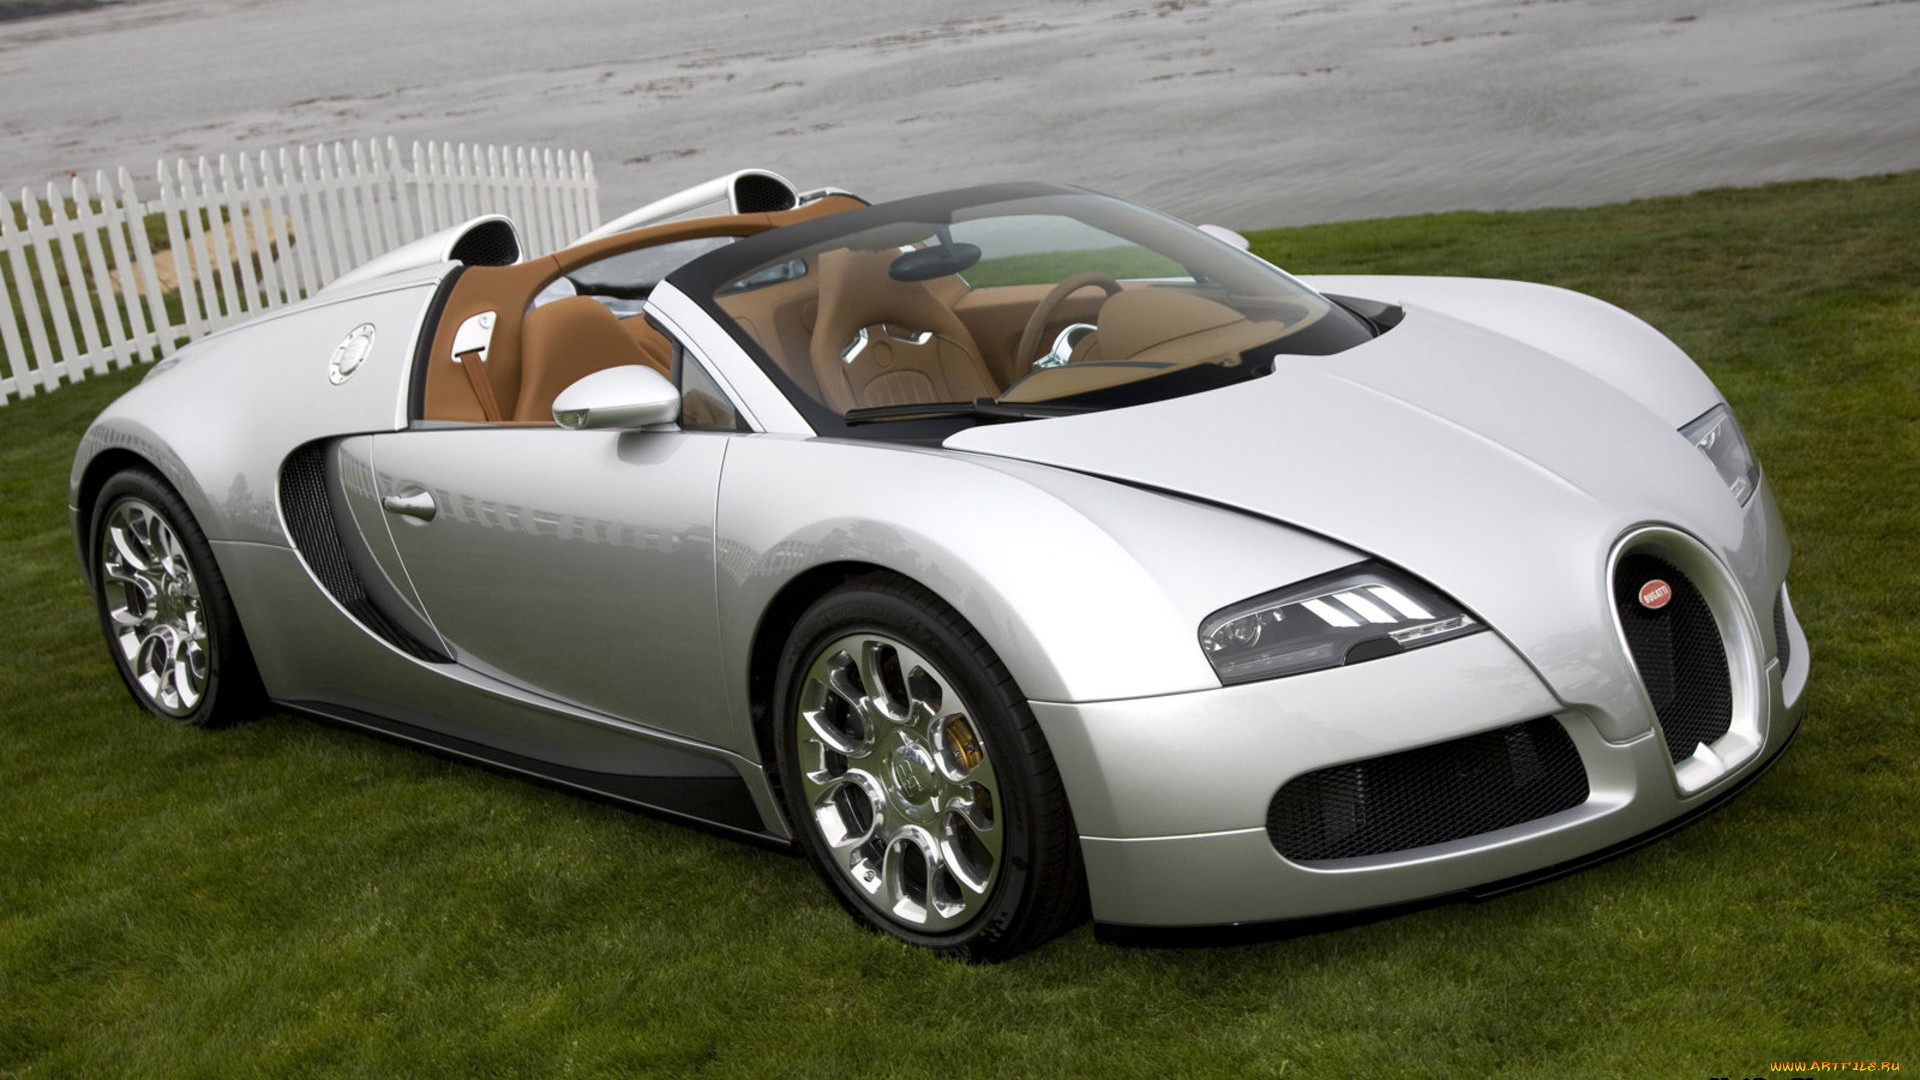 Veyron grand sport. Bugatti Veyron 16.4 Grand Sport. Bugatti Veyron Grand Sport (2009). 2008 Bugatti Veyron 16.4 Grand Sport. Bugatti Veyron 16.4.